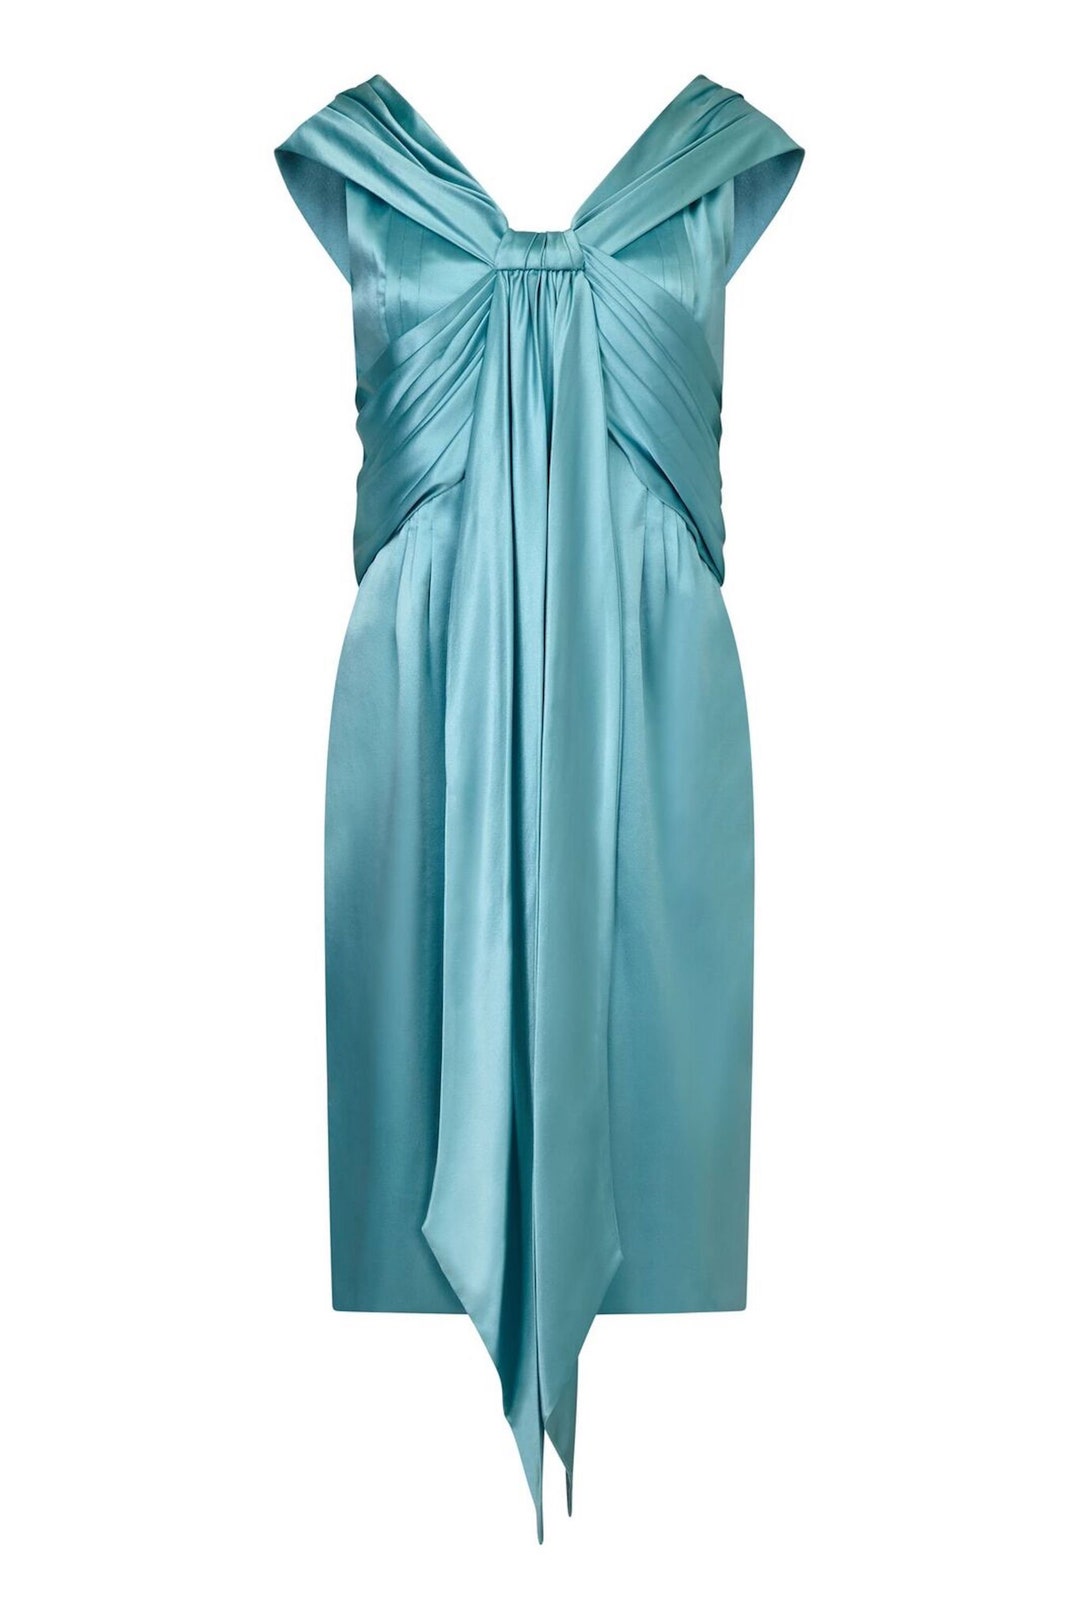 Hardy Amies Couture 1950s Silk Satin Aquamarine Dress - Etsy